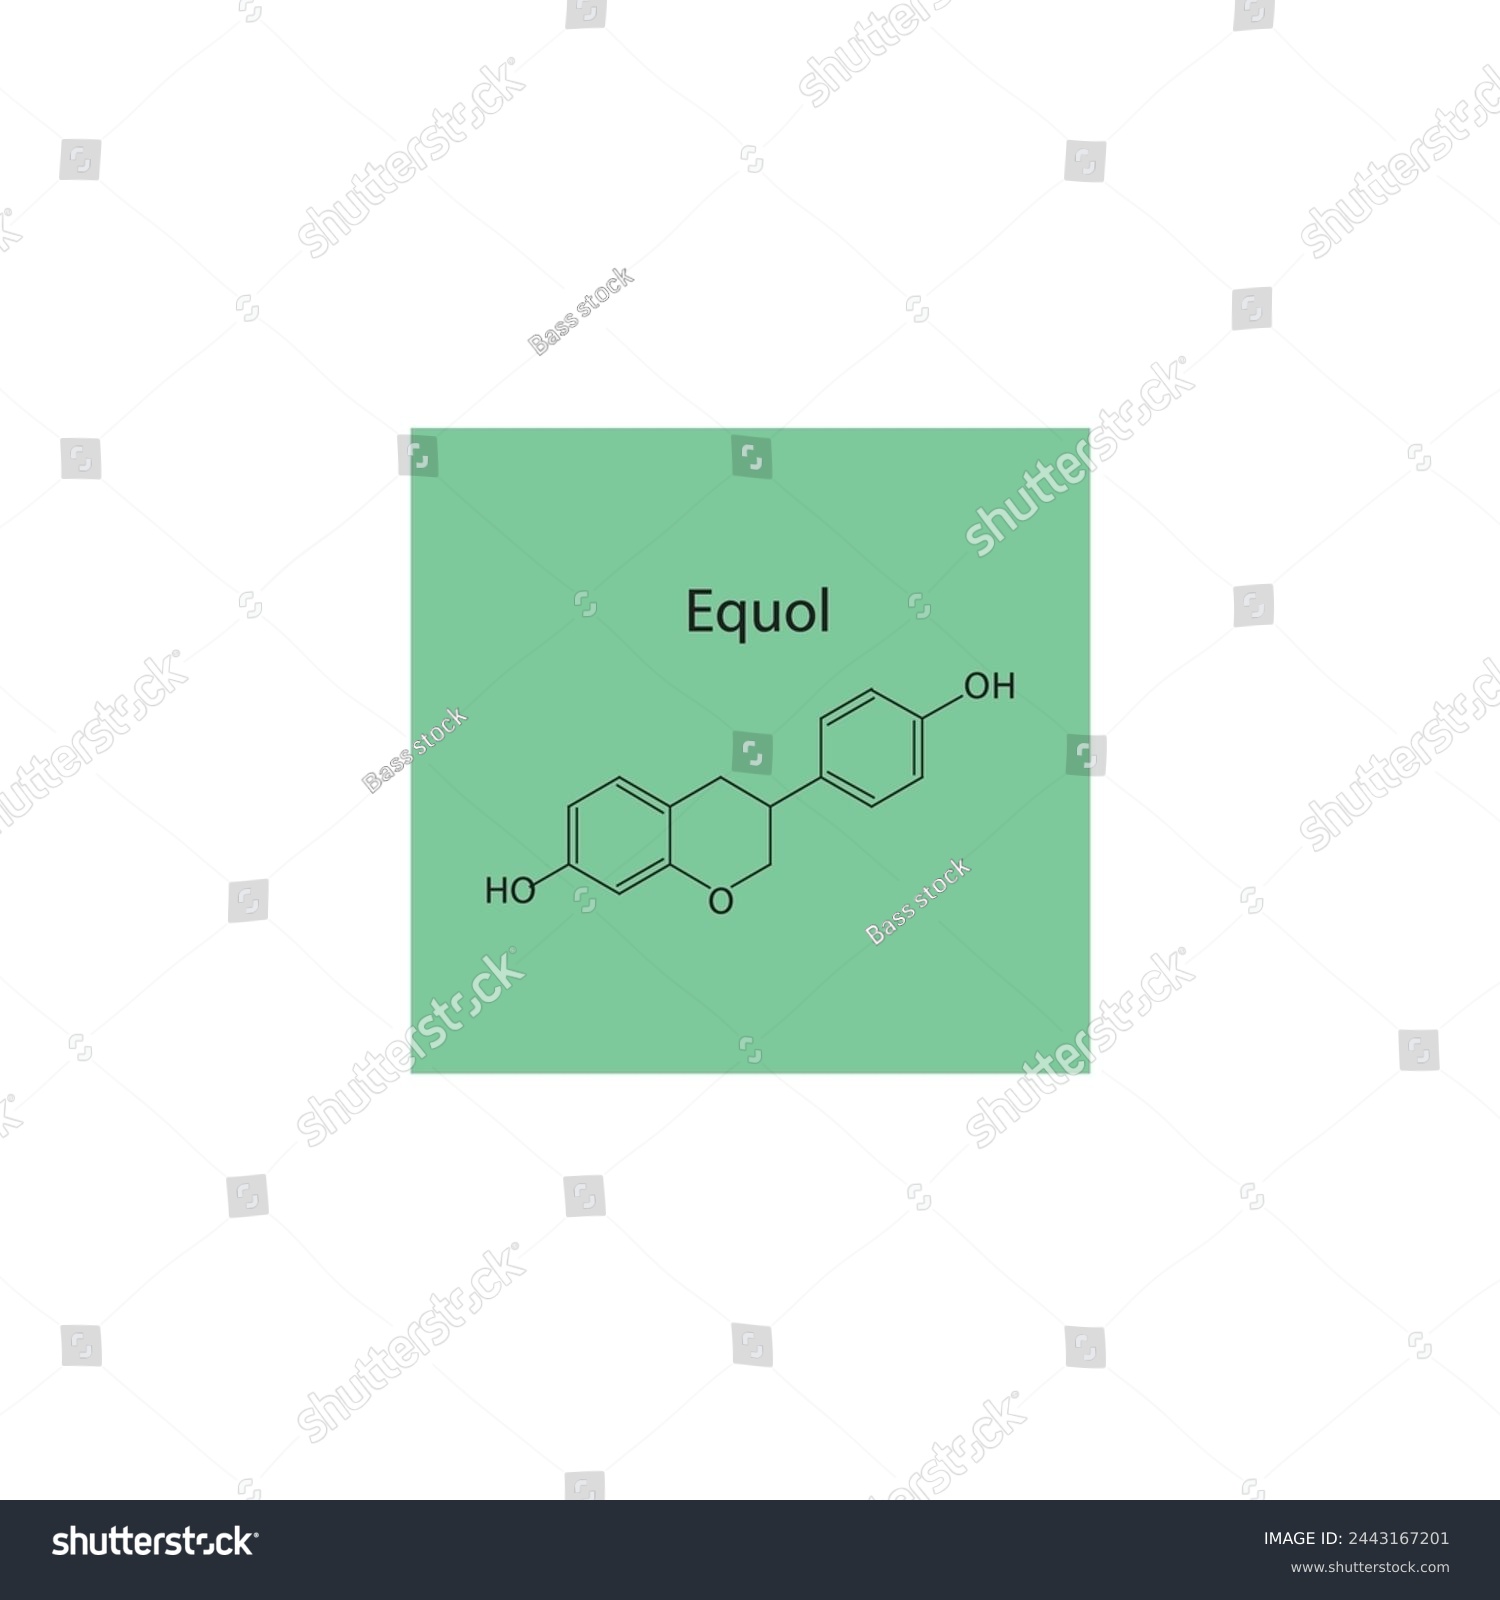 SVG of Equol skeletal structure diagram.Isoflavanone compound molecule scientific illustration on green background. svg